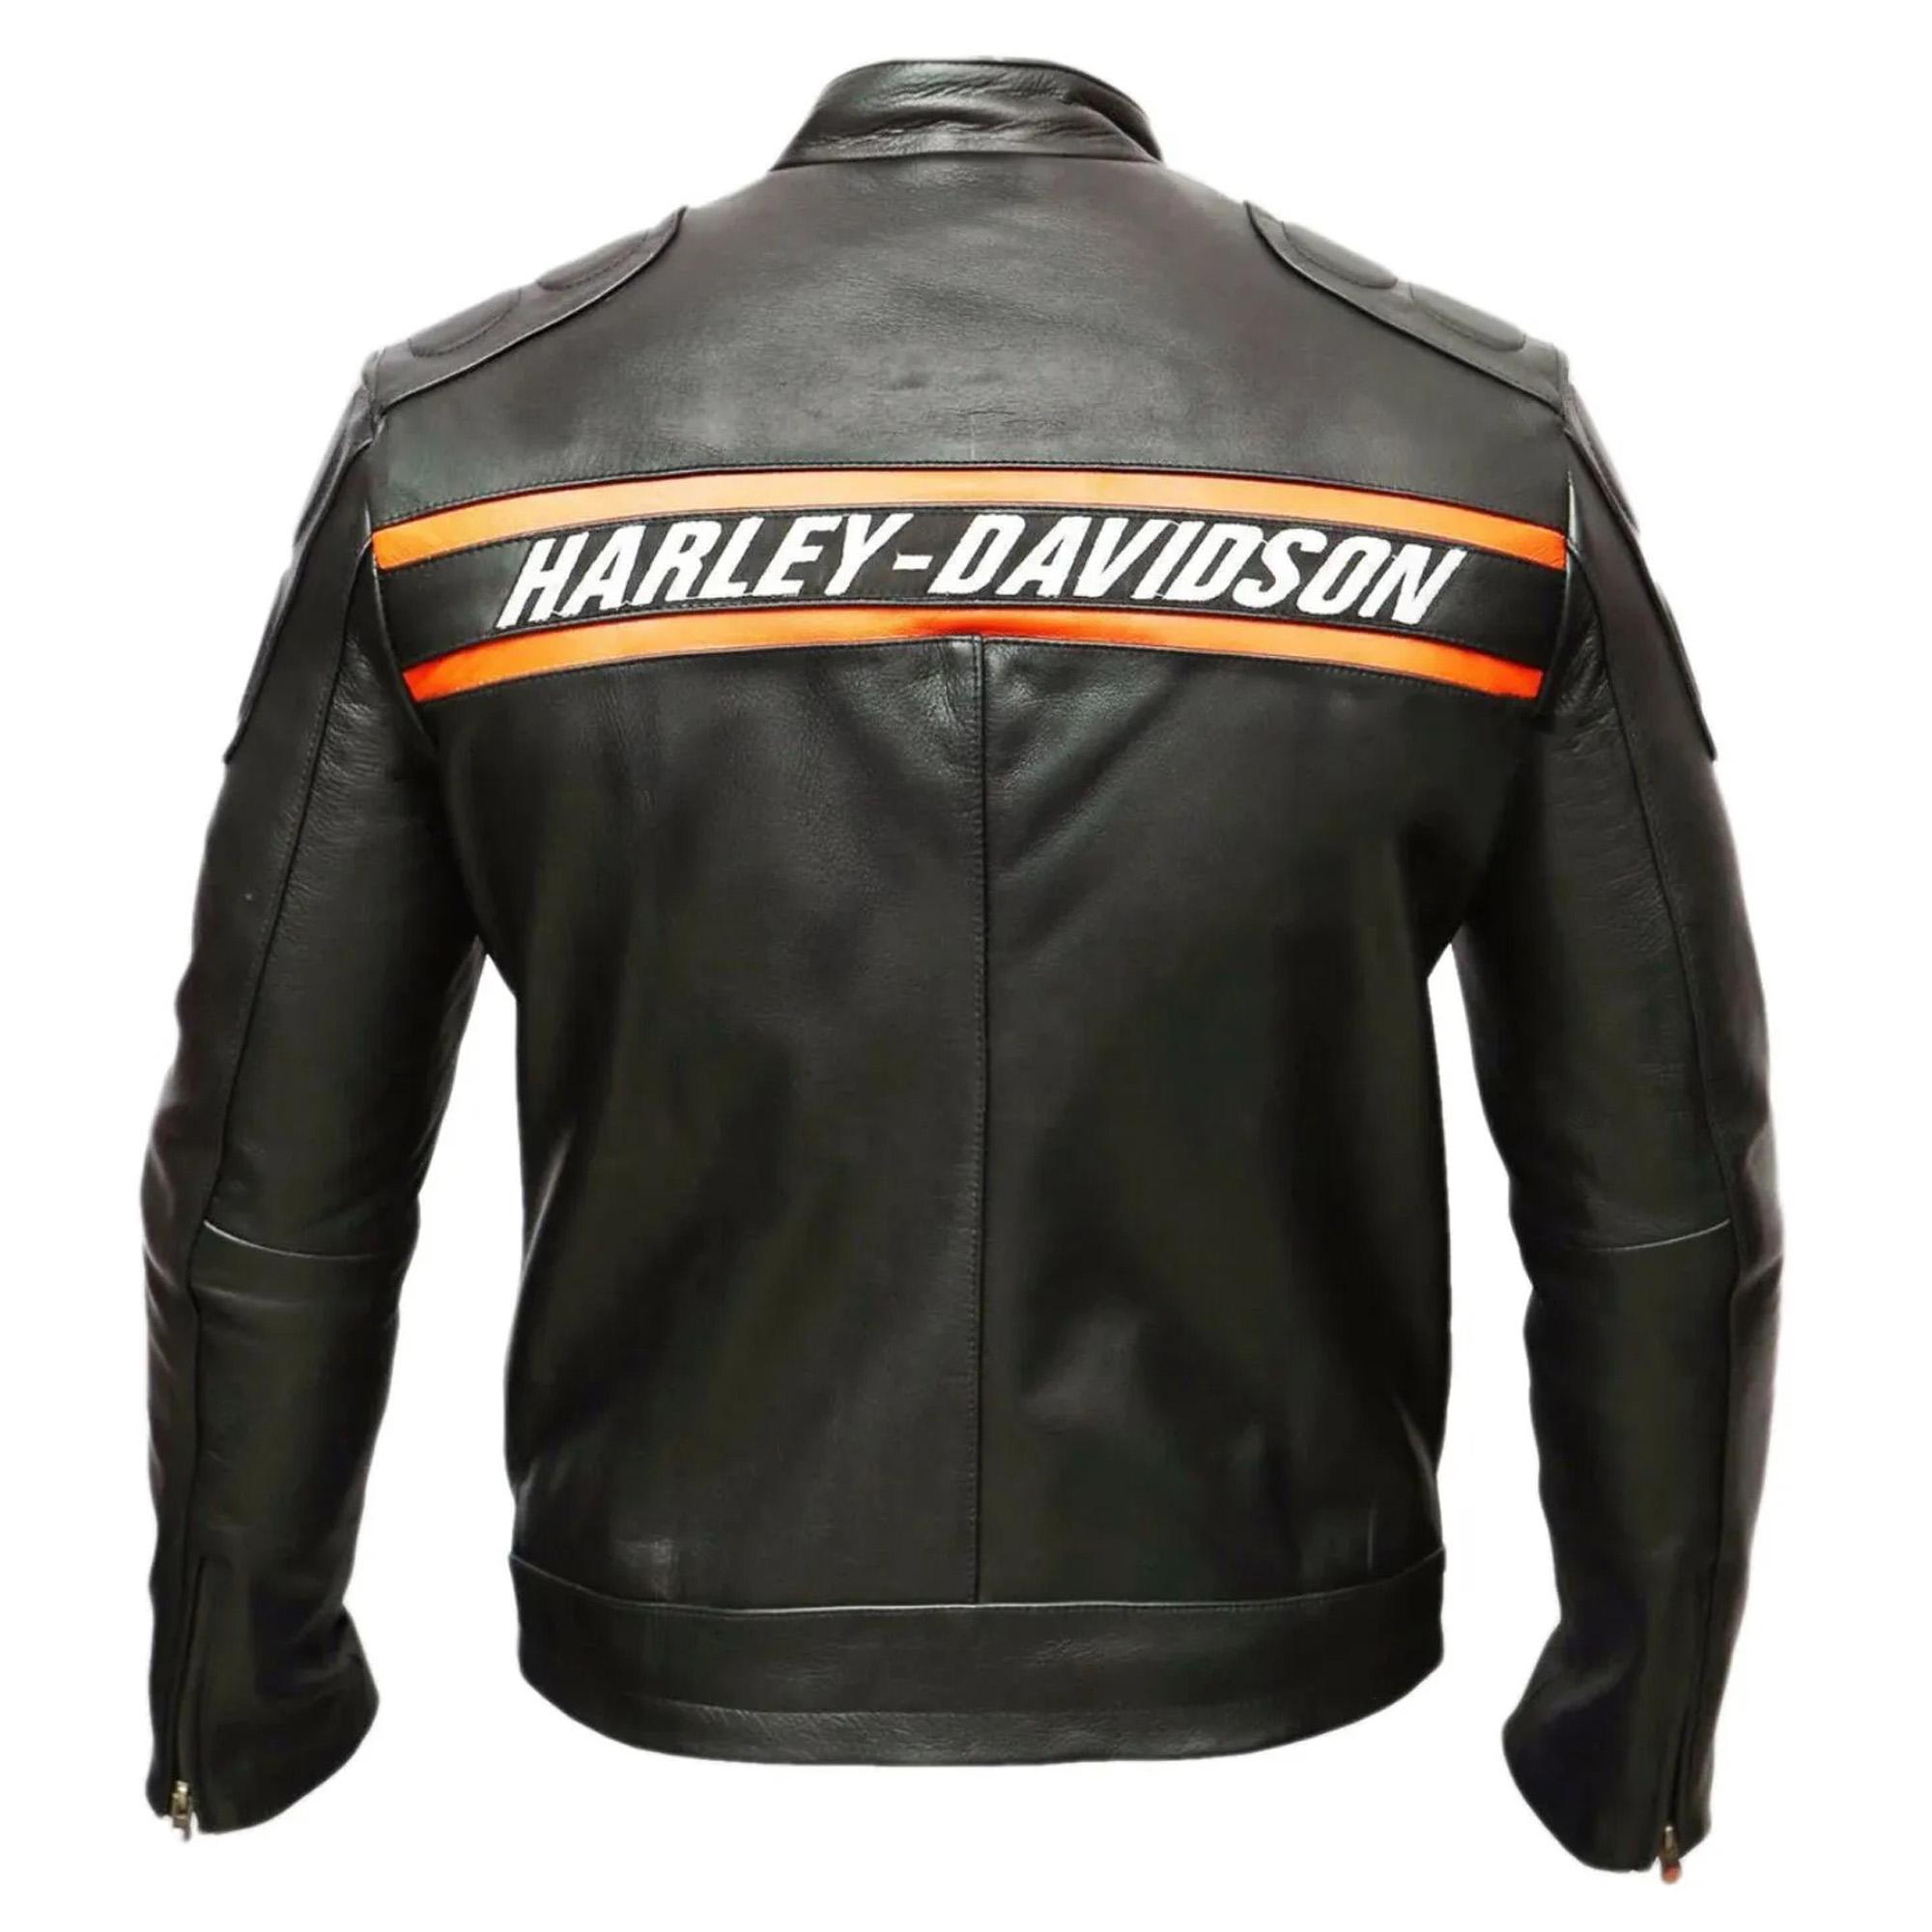 Bill Goldberg Harley Davidson Jacket Classic Harley Davidson Motorcycle Jacket Black & Orange